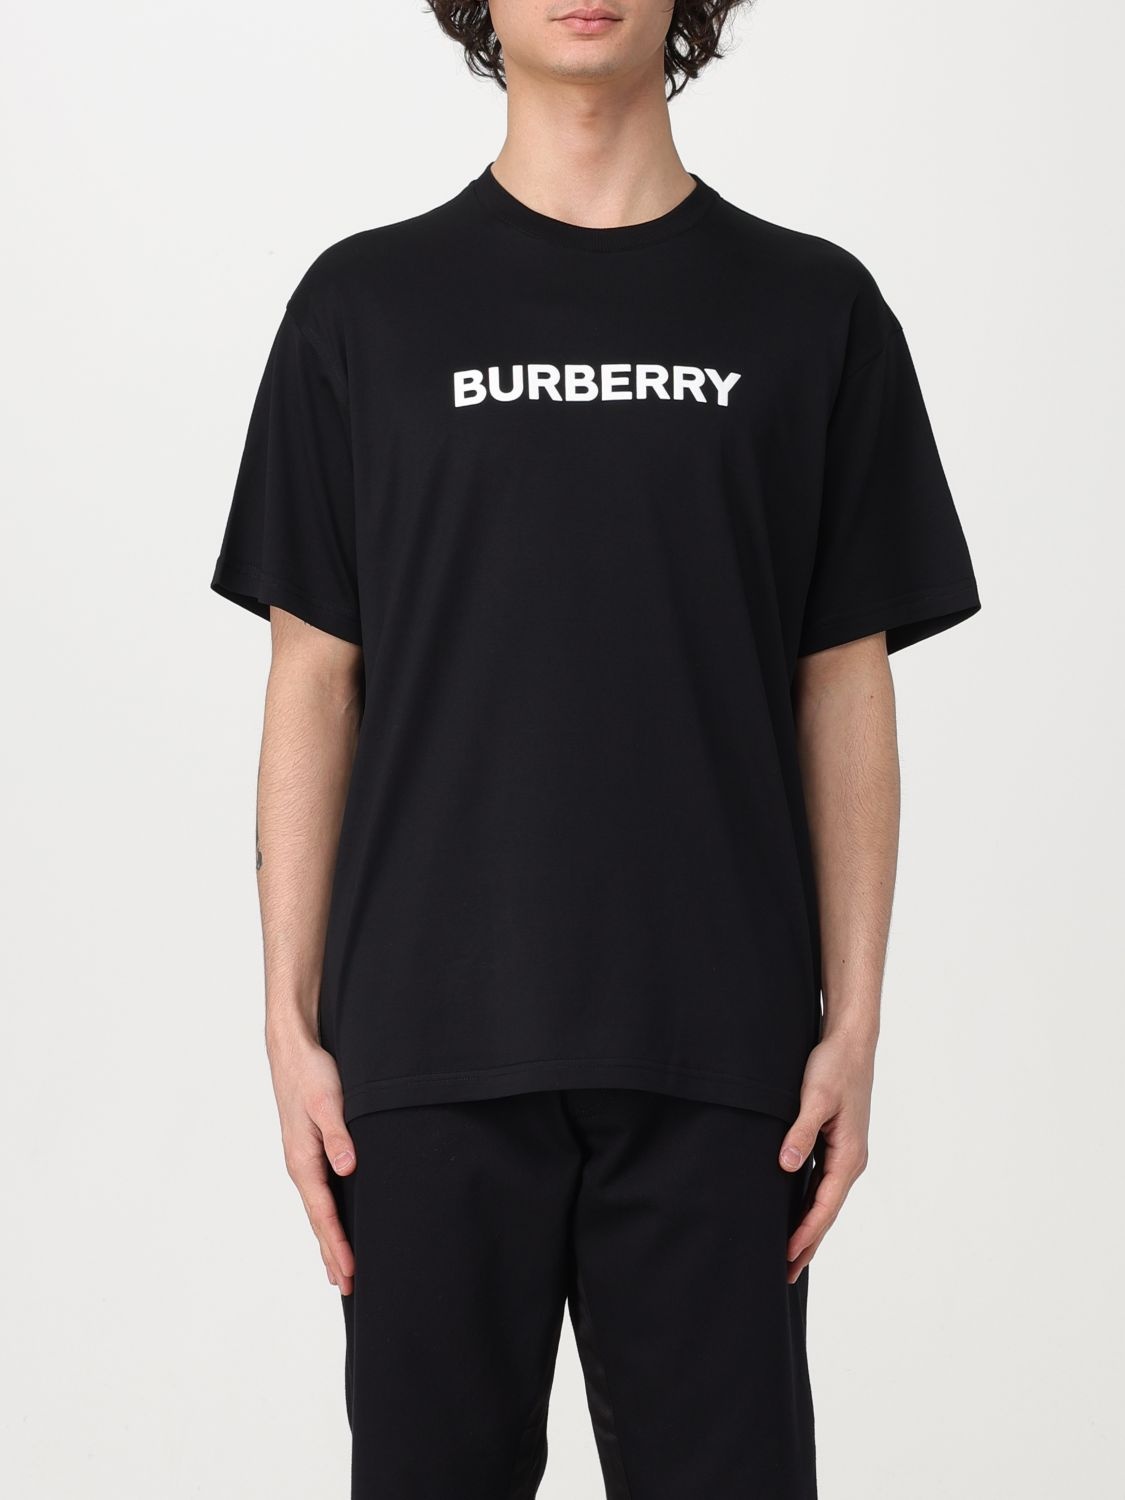 Burberry t-shirt for man - 1